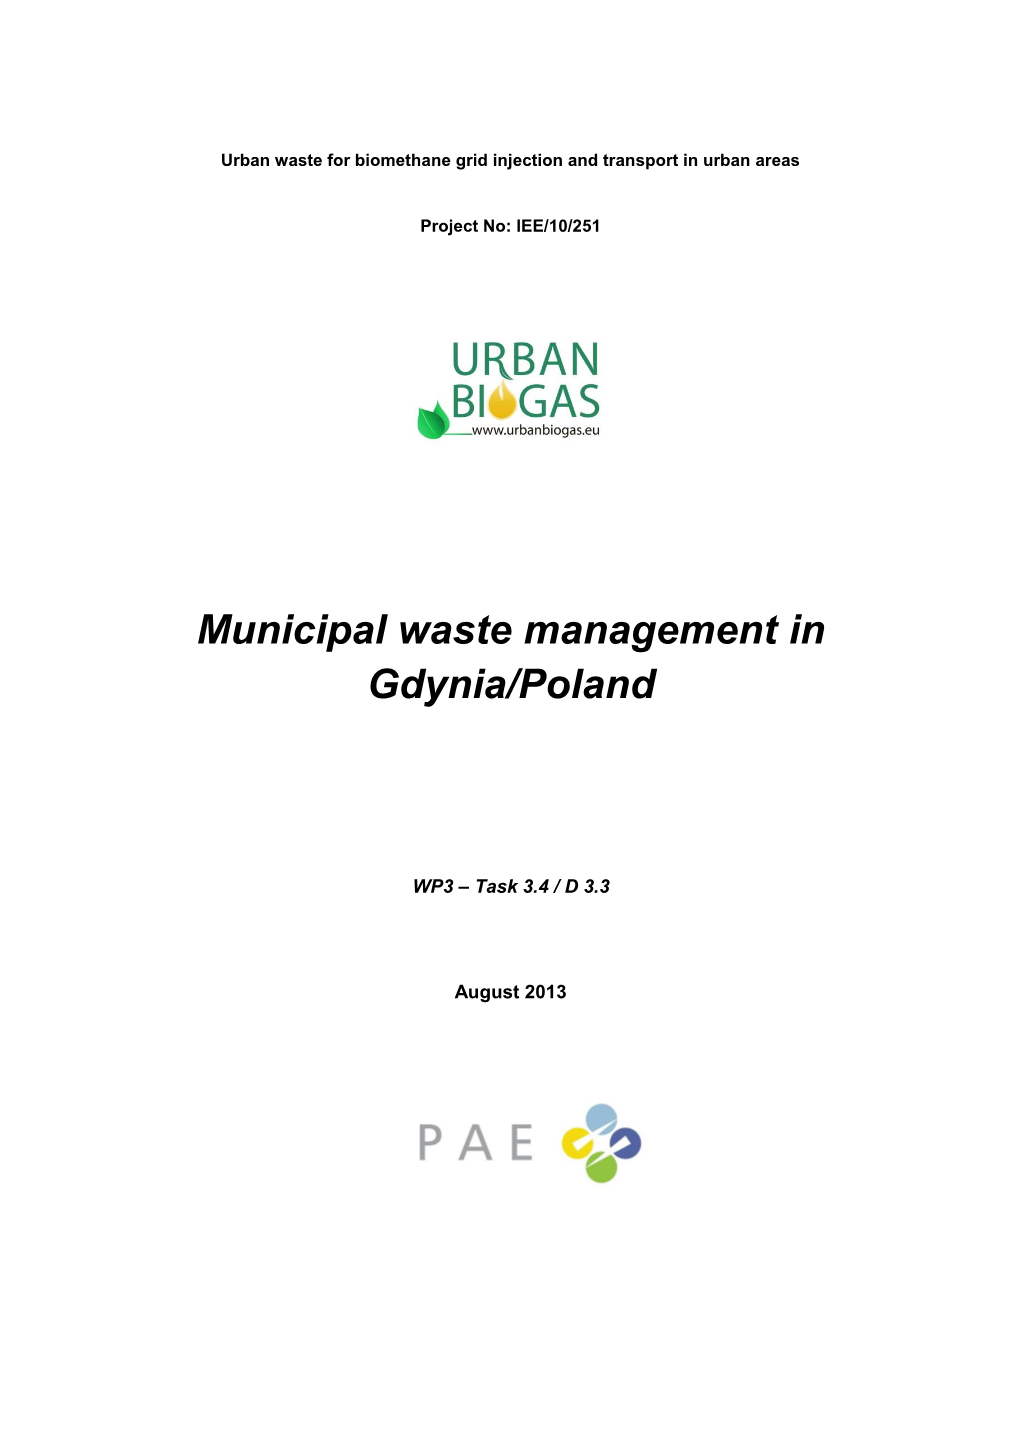 Municipal Waste Managment in Gdynia